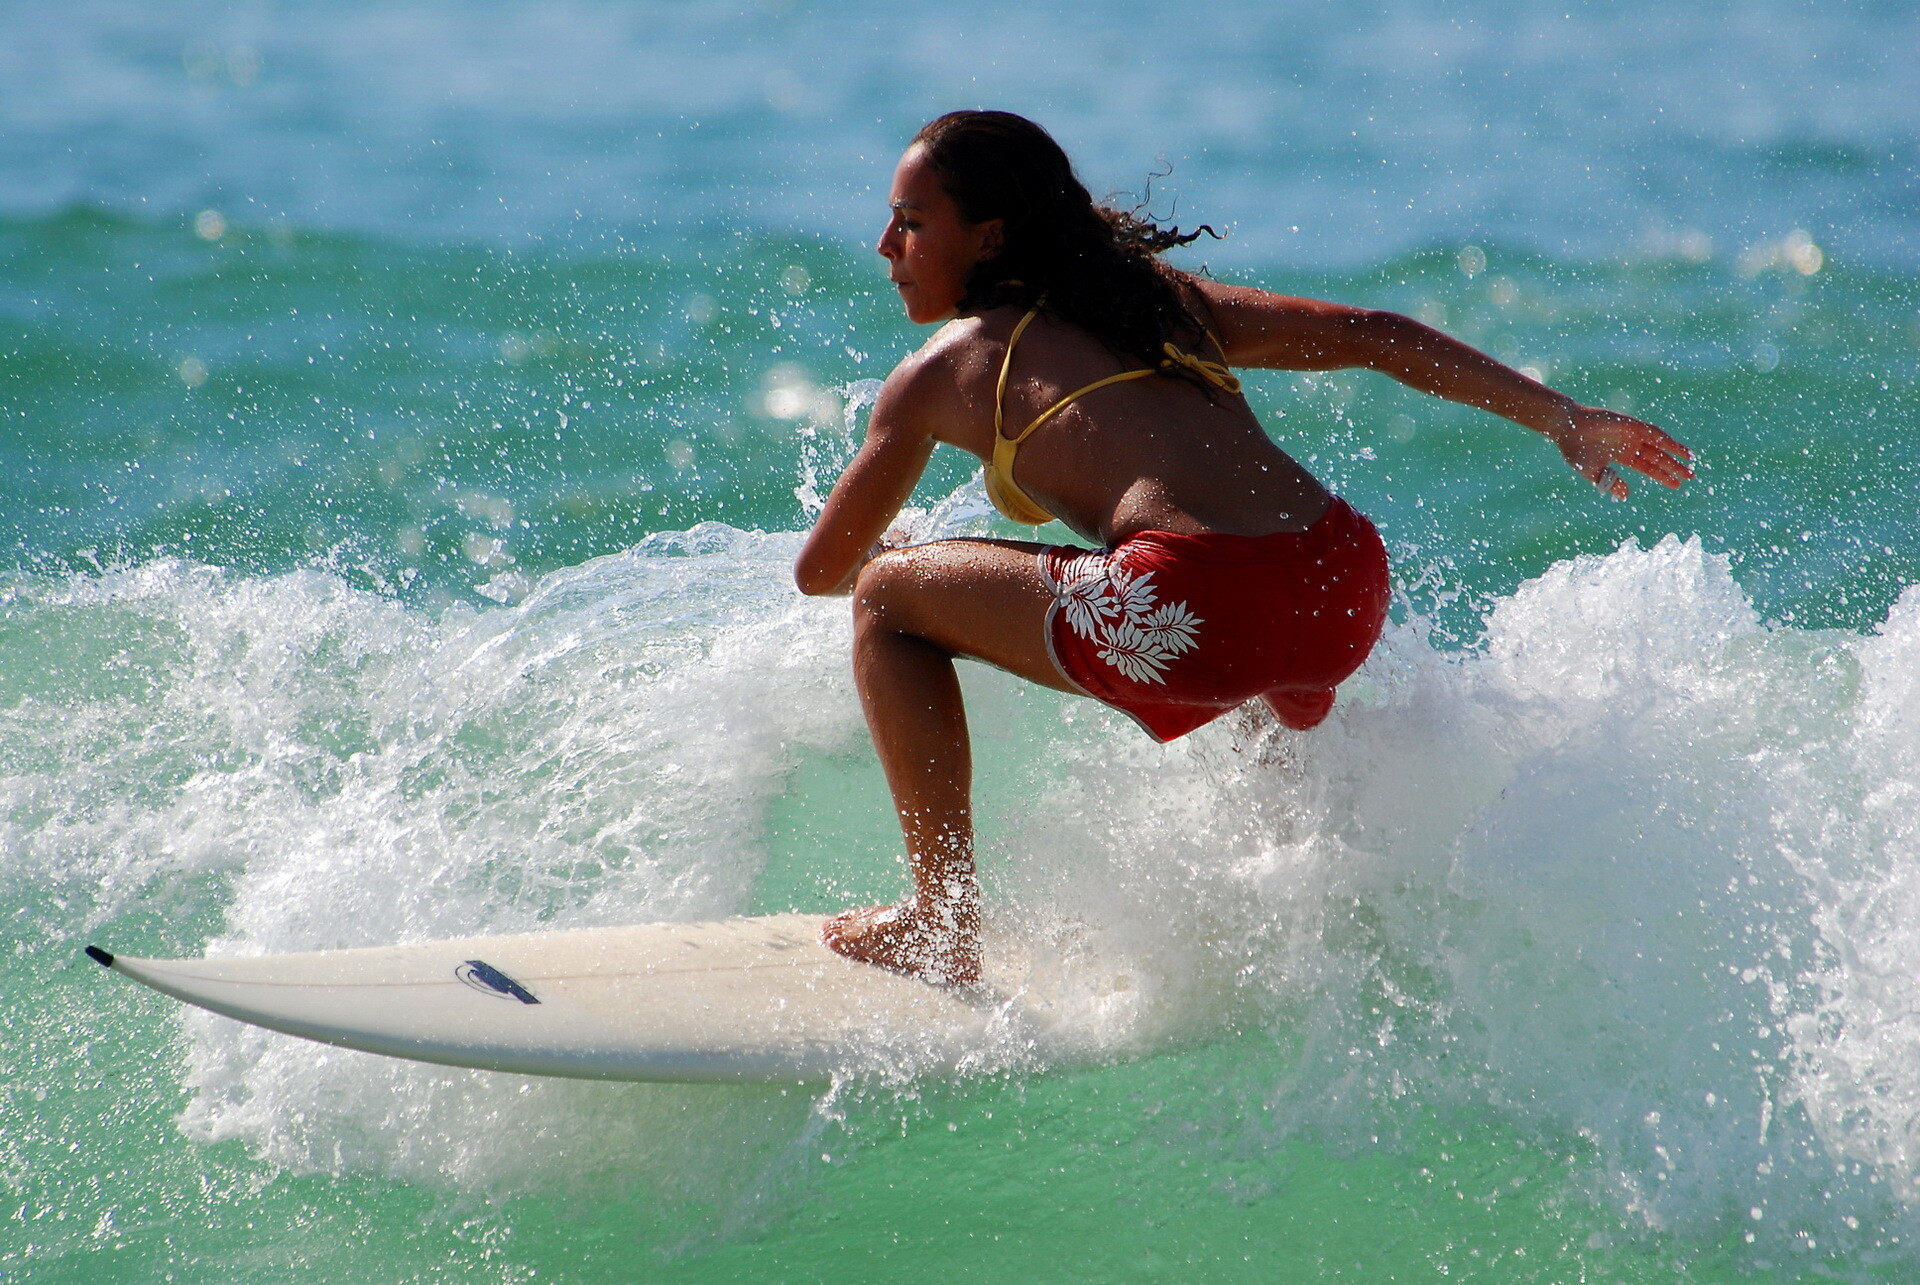 Girl Surfing: Big-wave contest, Short boarding tricks performance, Female athlete. 1920x1290 HD Wallpaper.